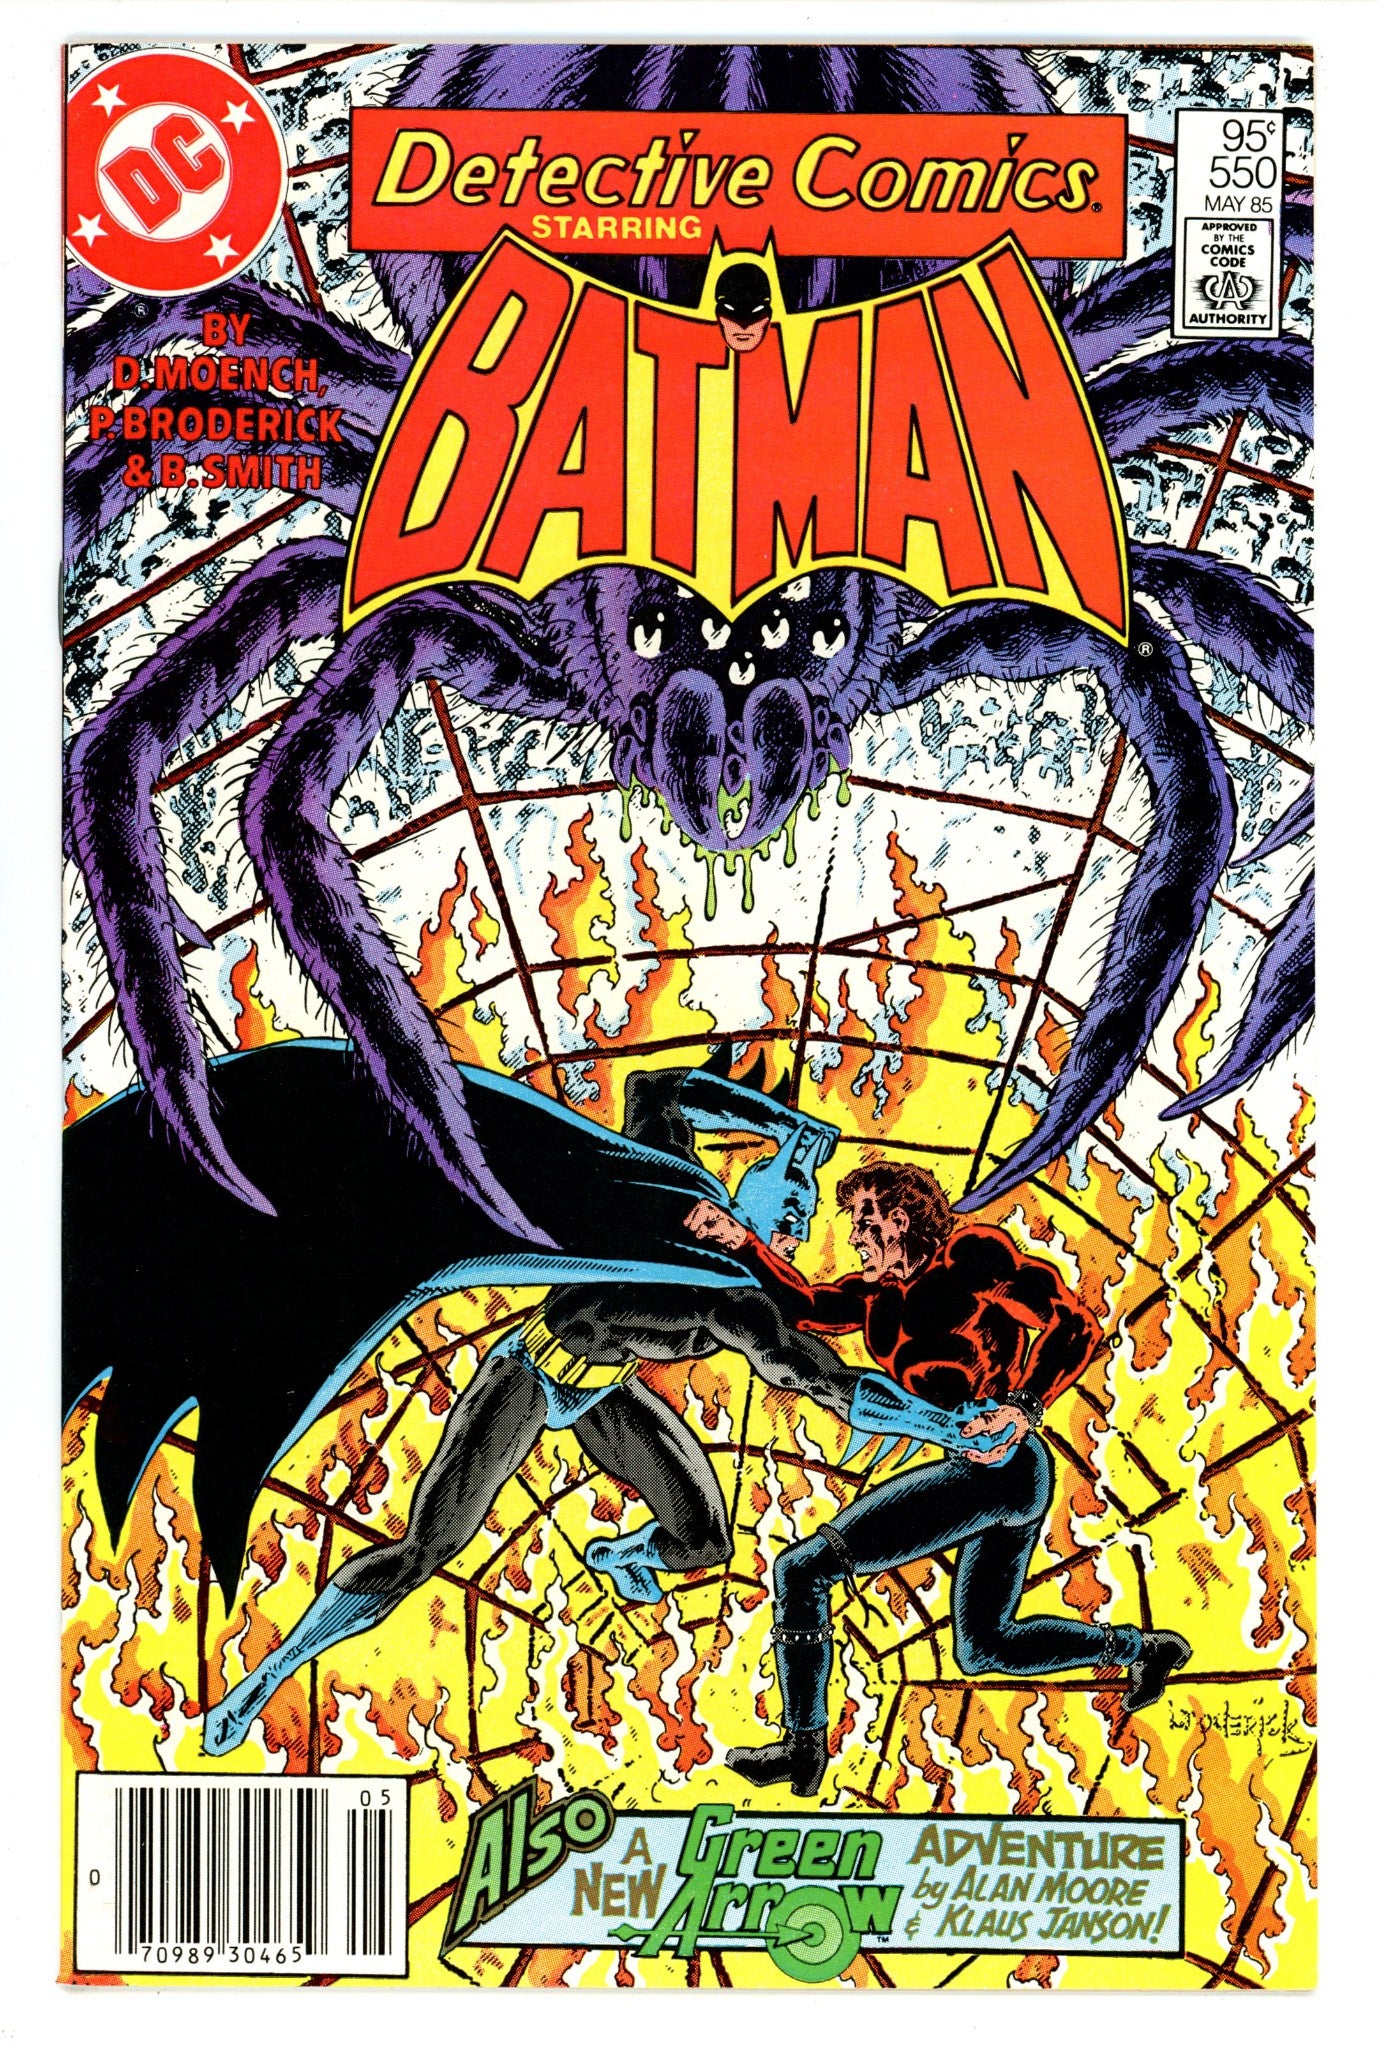 Detective Comics Vol 1 550 VF- (7.5) (1985) Canadian Price Variant 